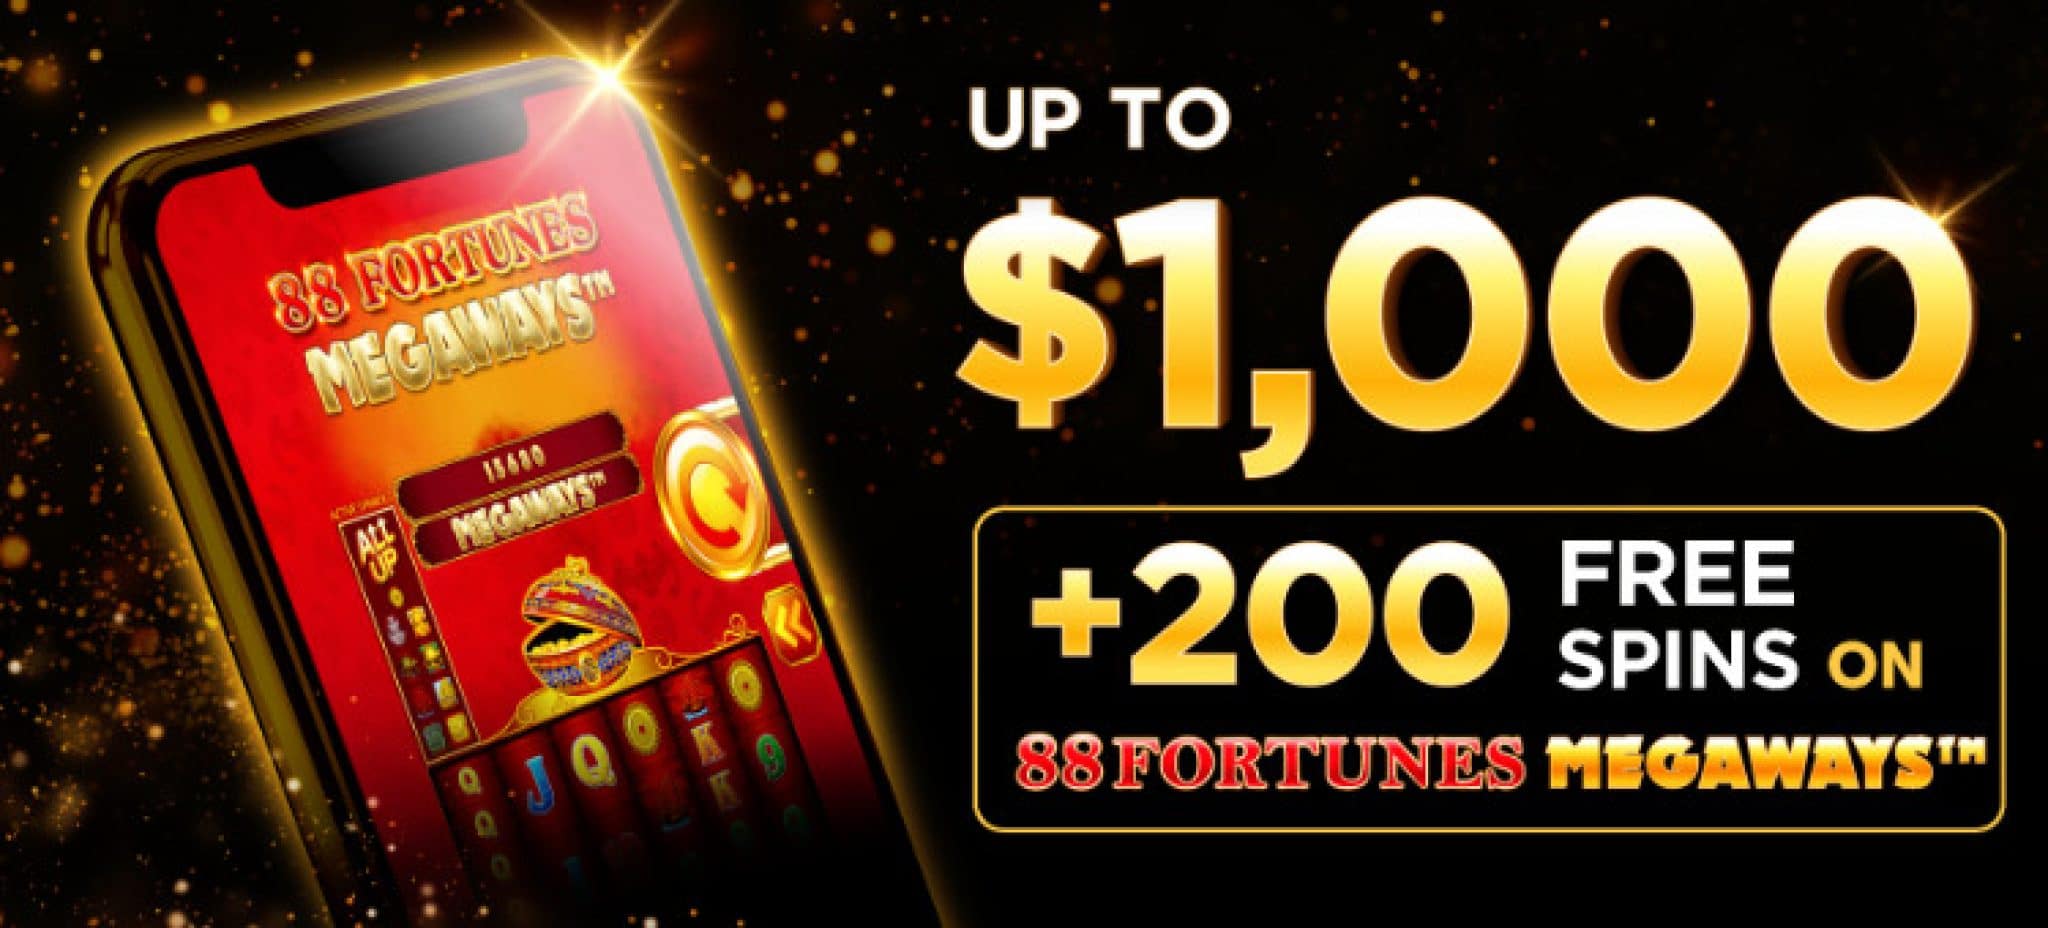 golden nugget casino online michigan